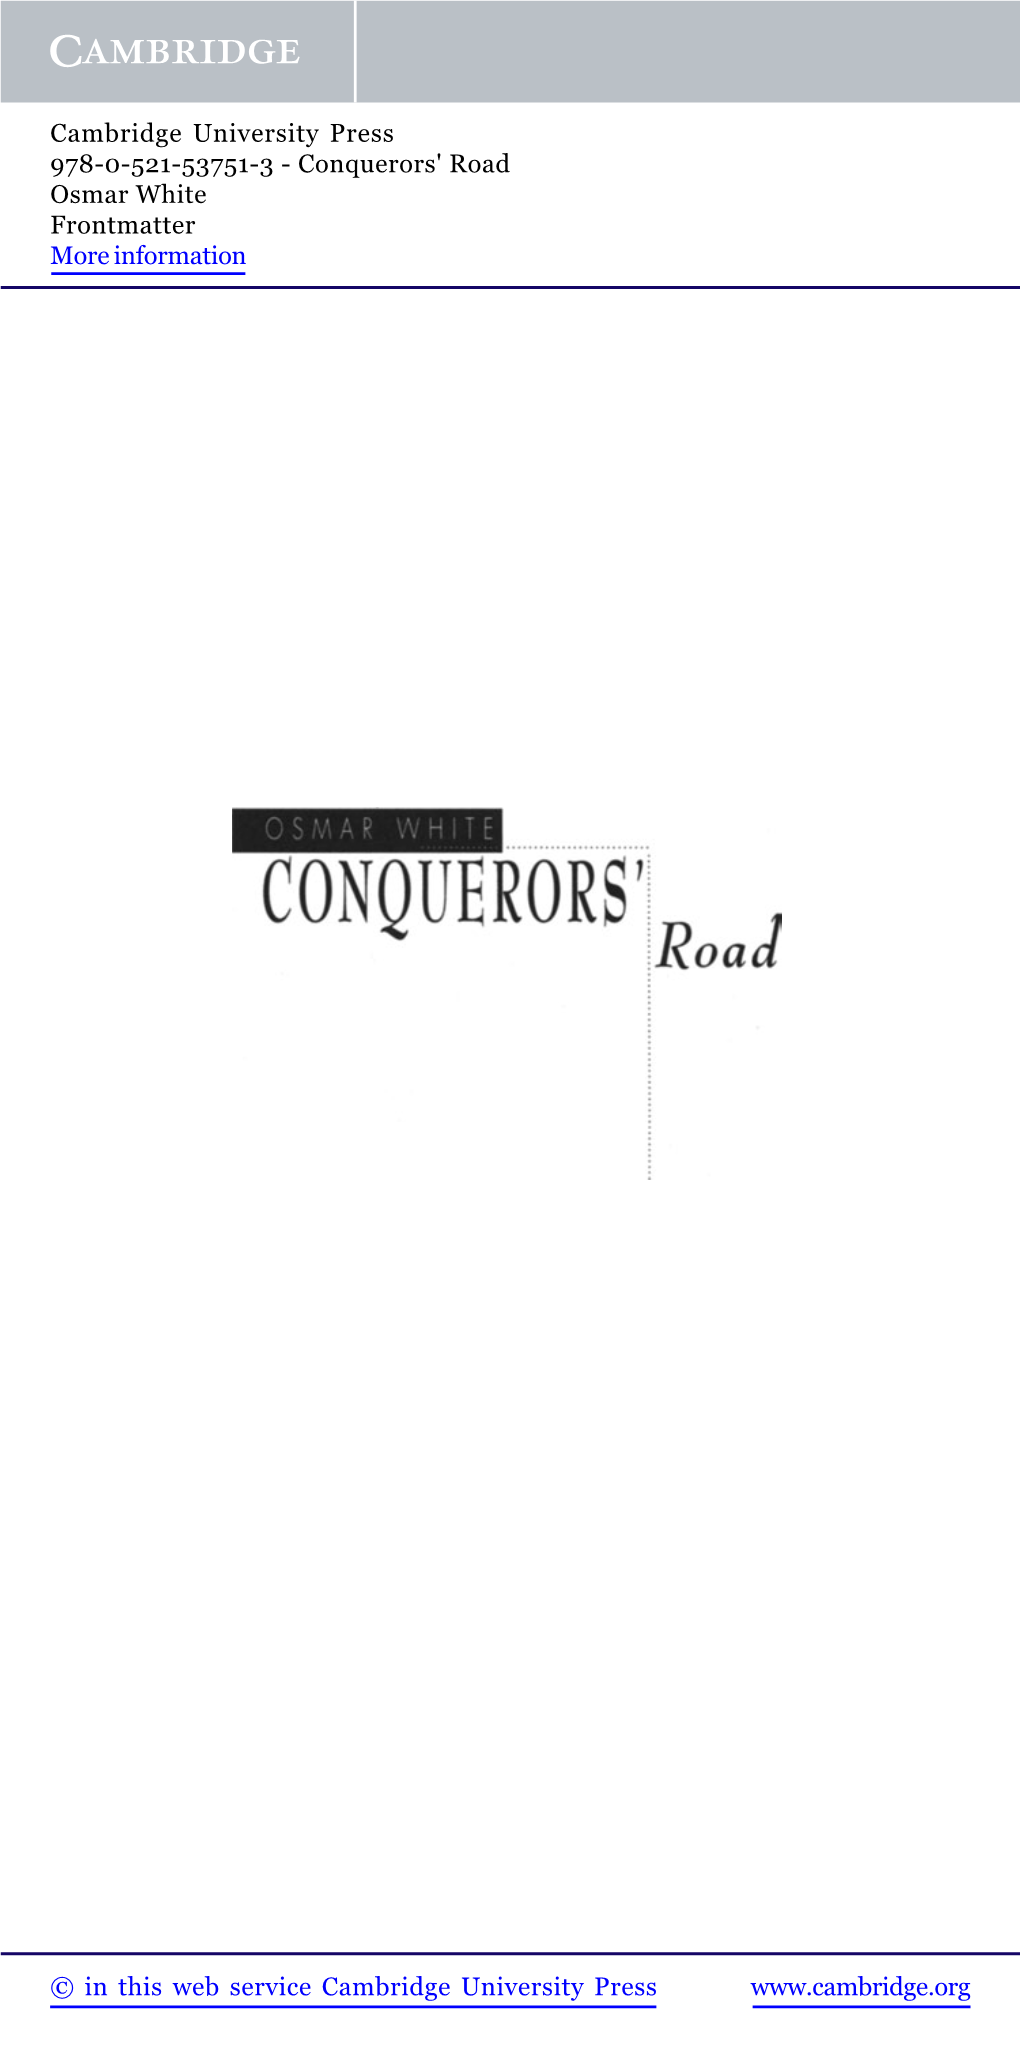 CONQUERORS'road